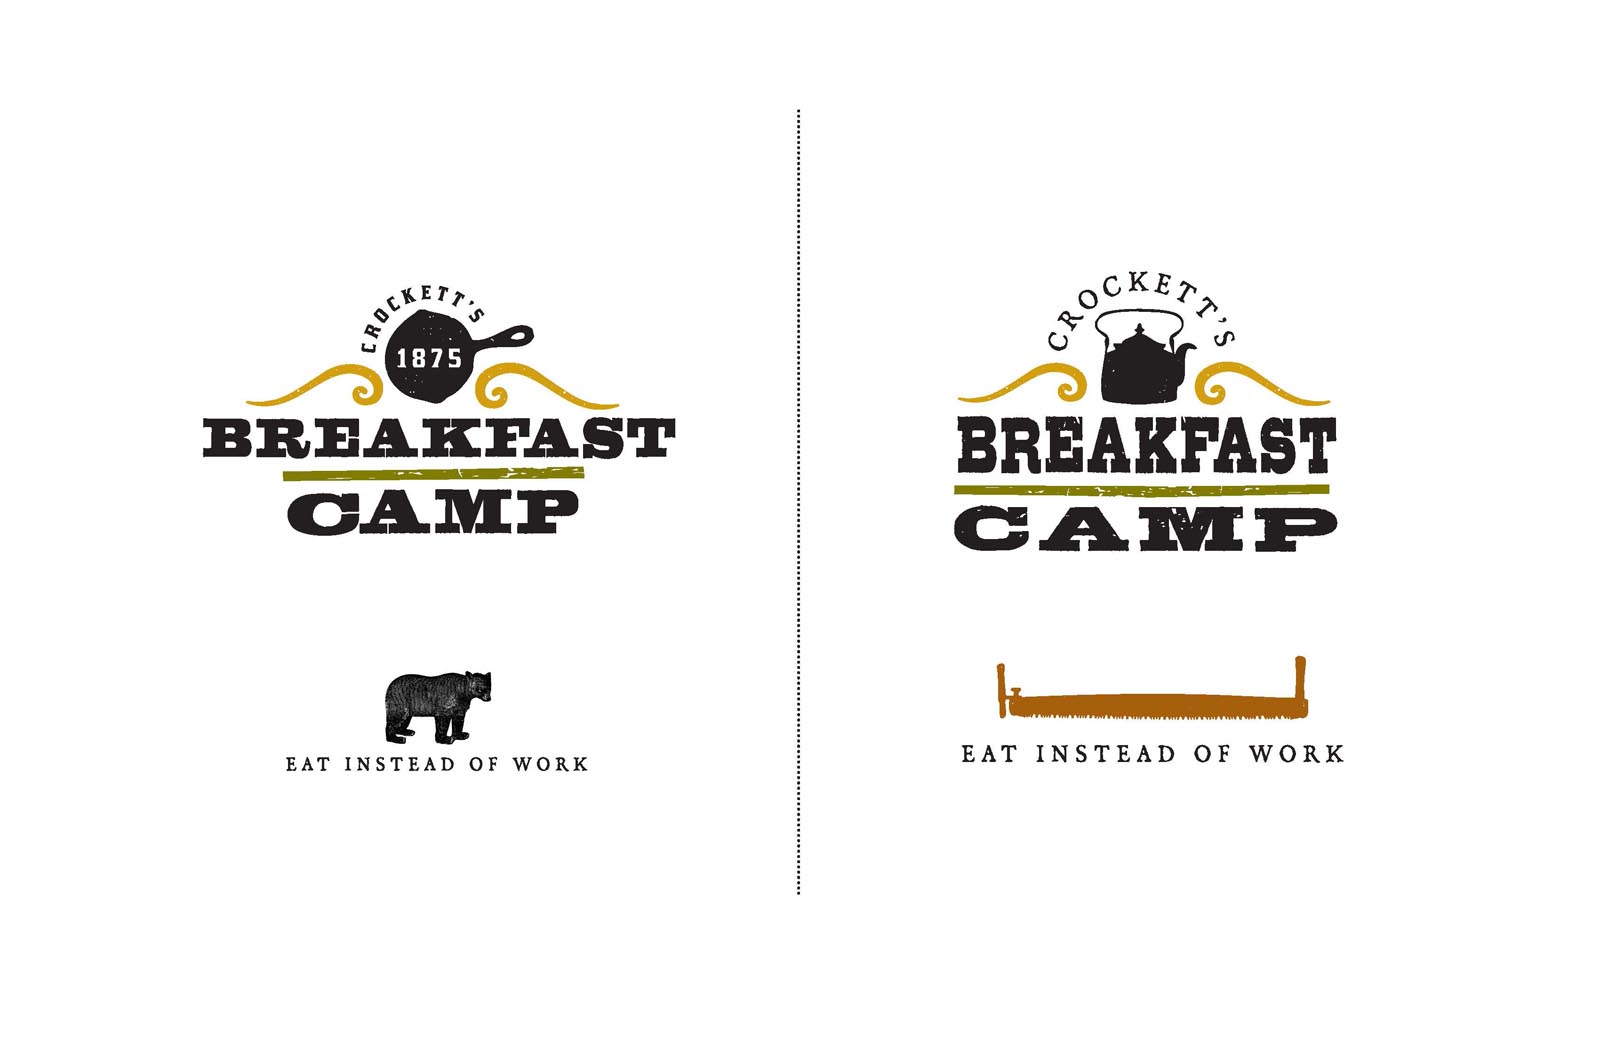 Crocketts Breakfast Camp